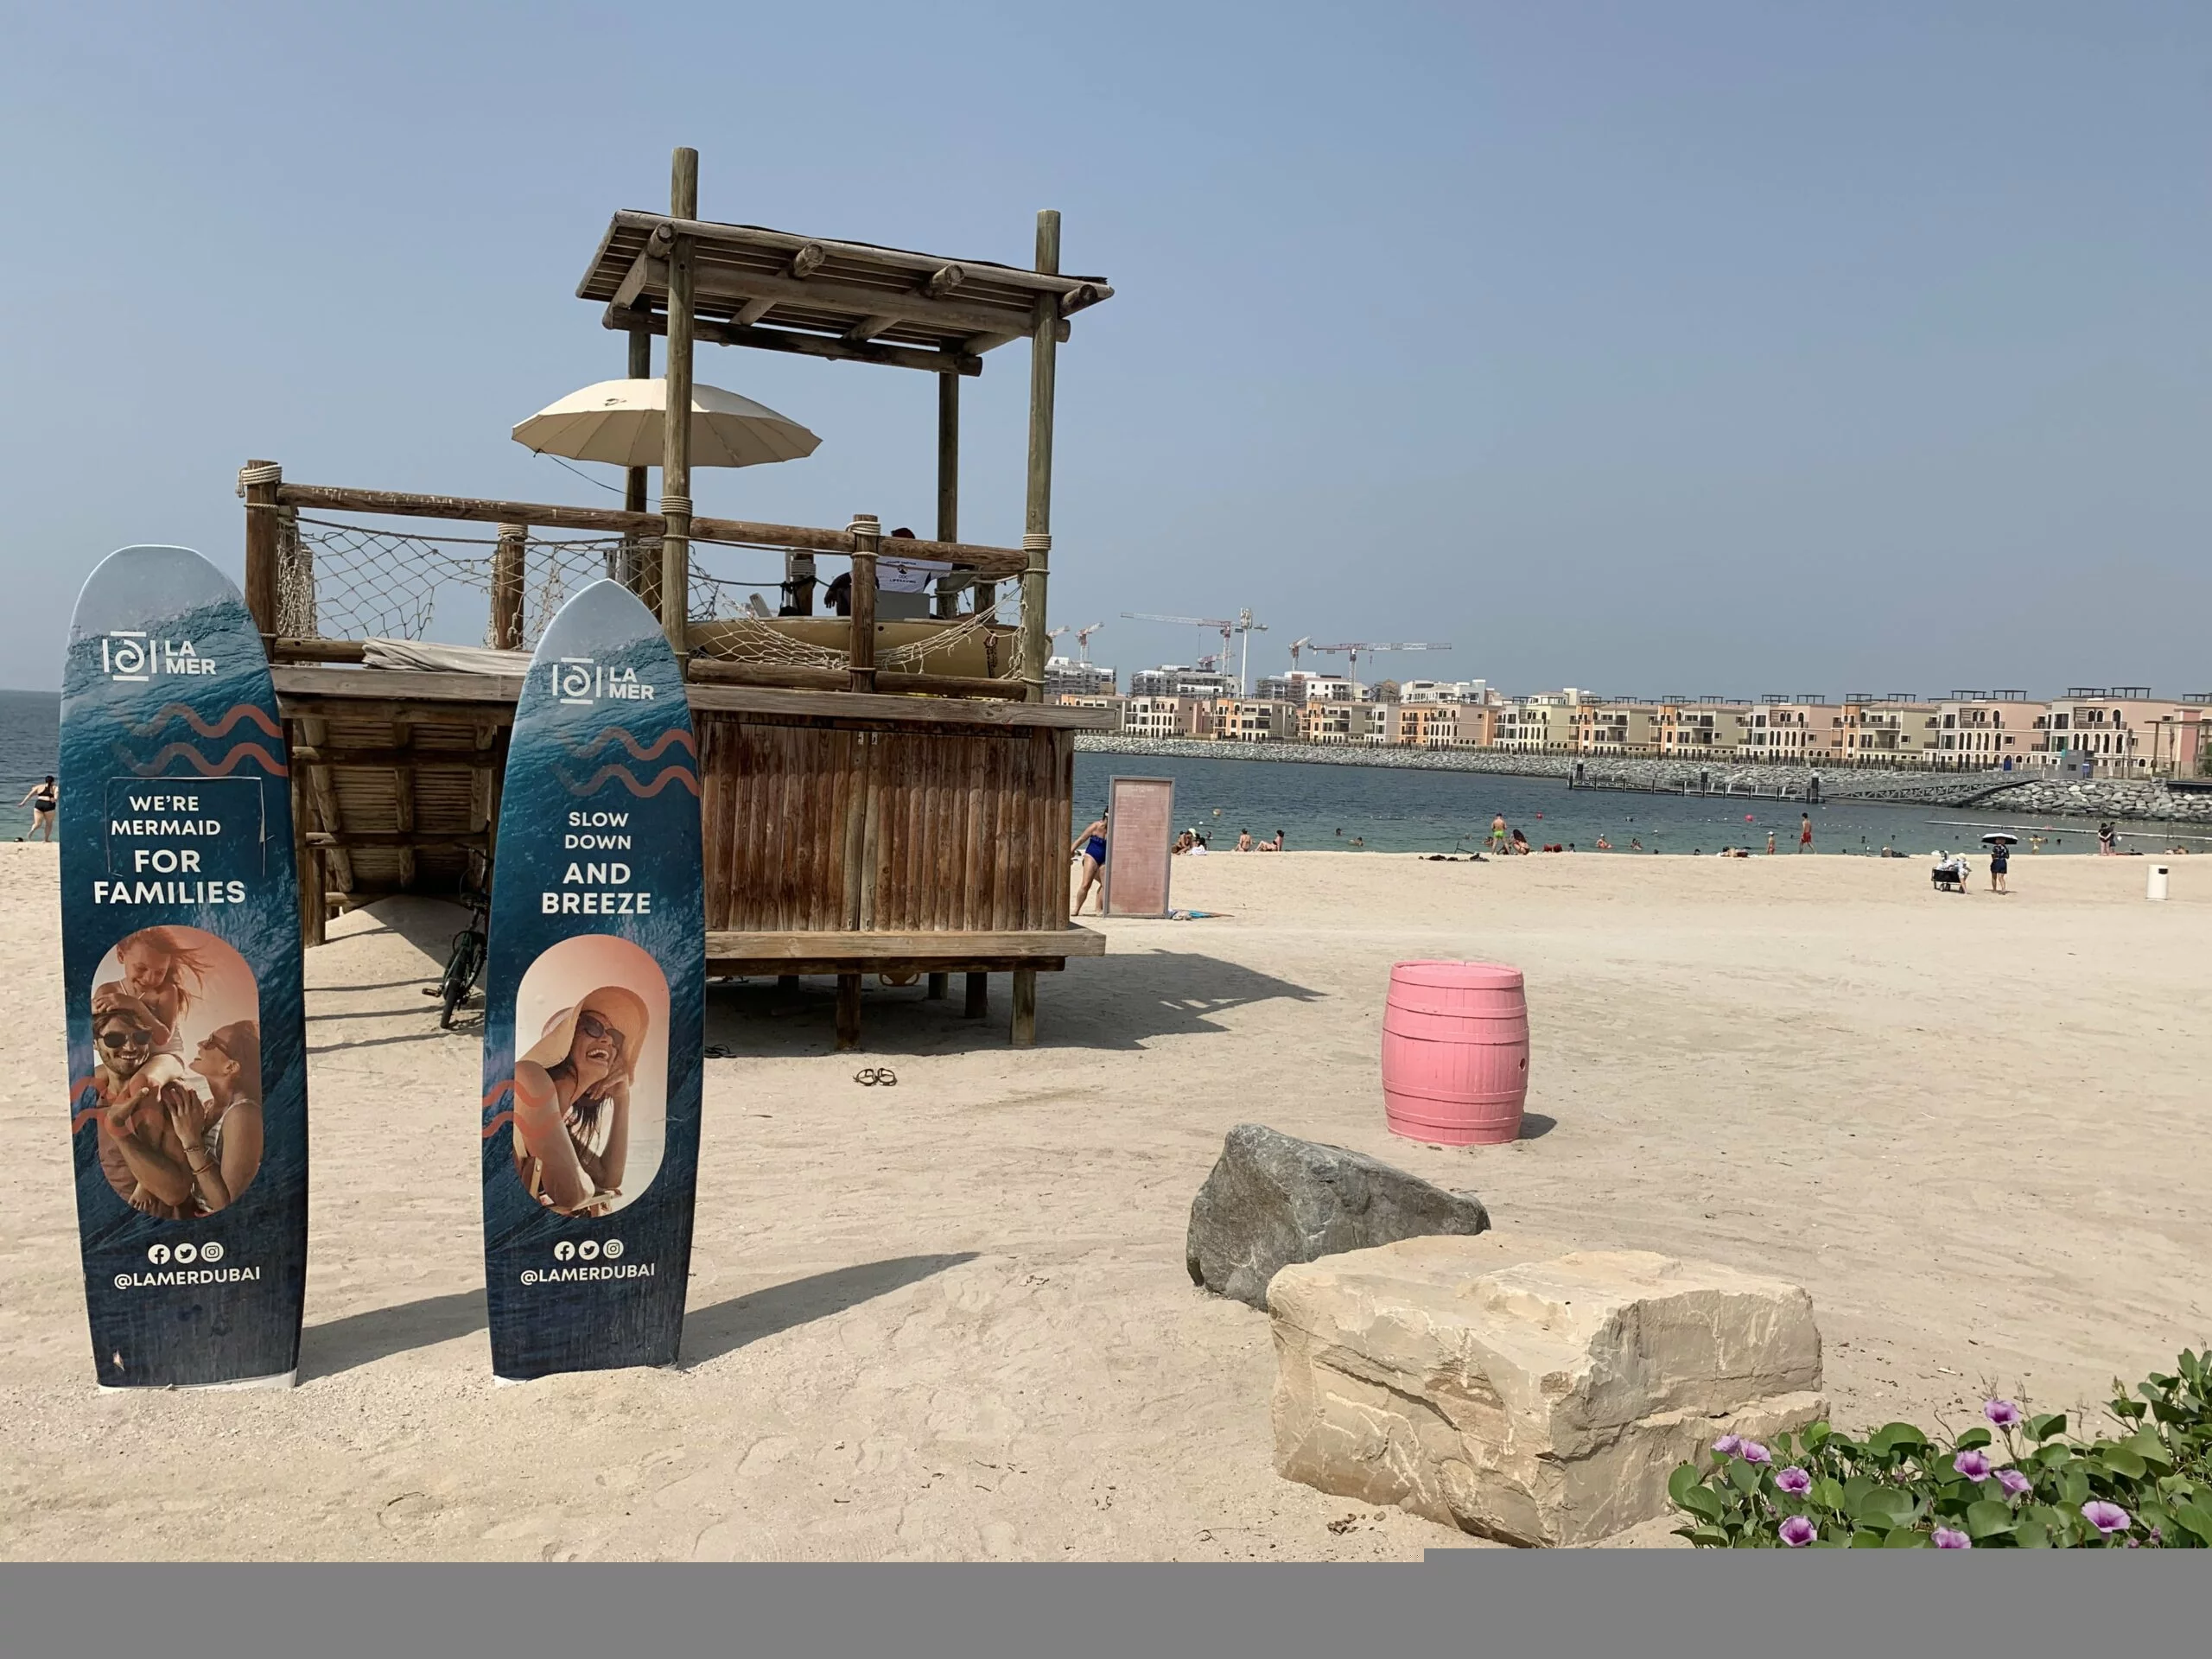 La Mer - one of free beaches in Dubai